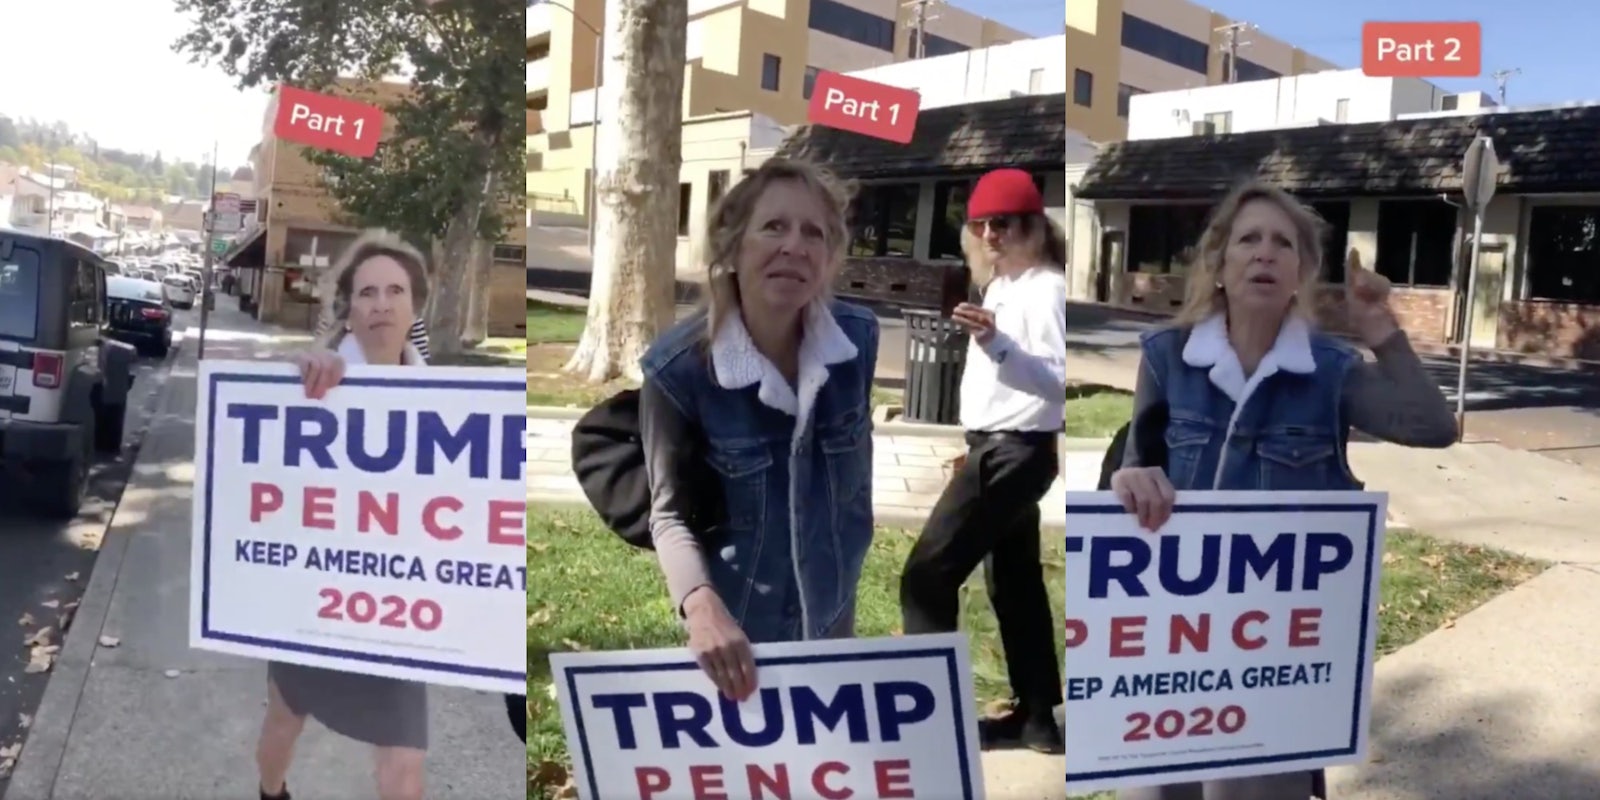 An elderly female Trump supporter